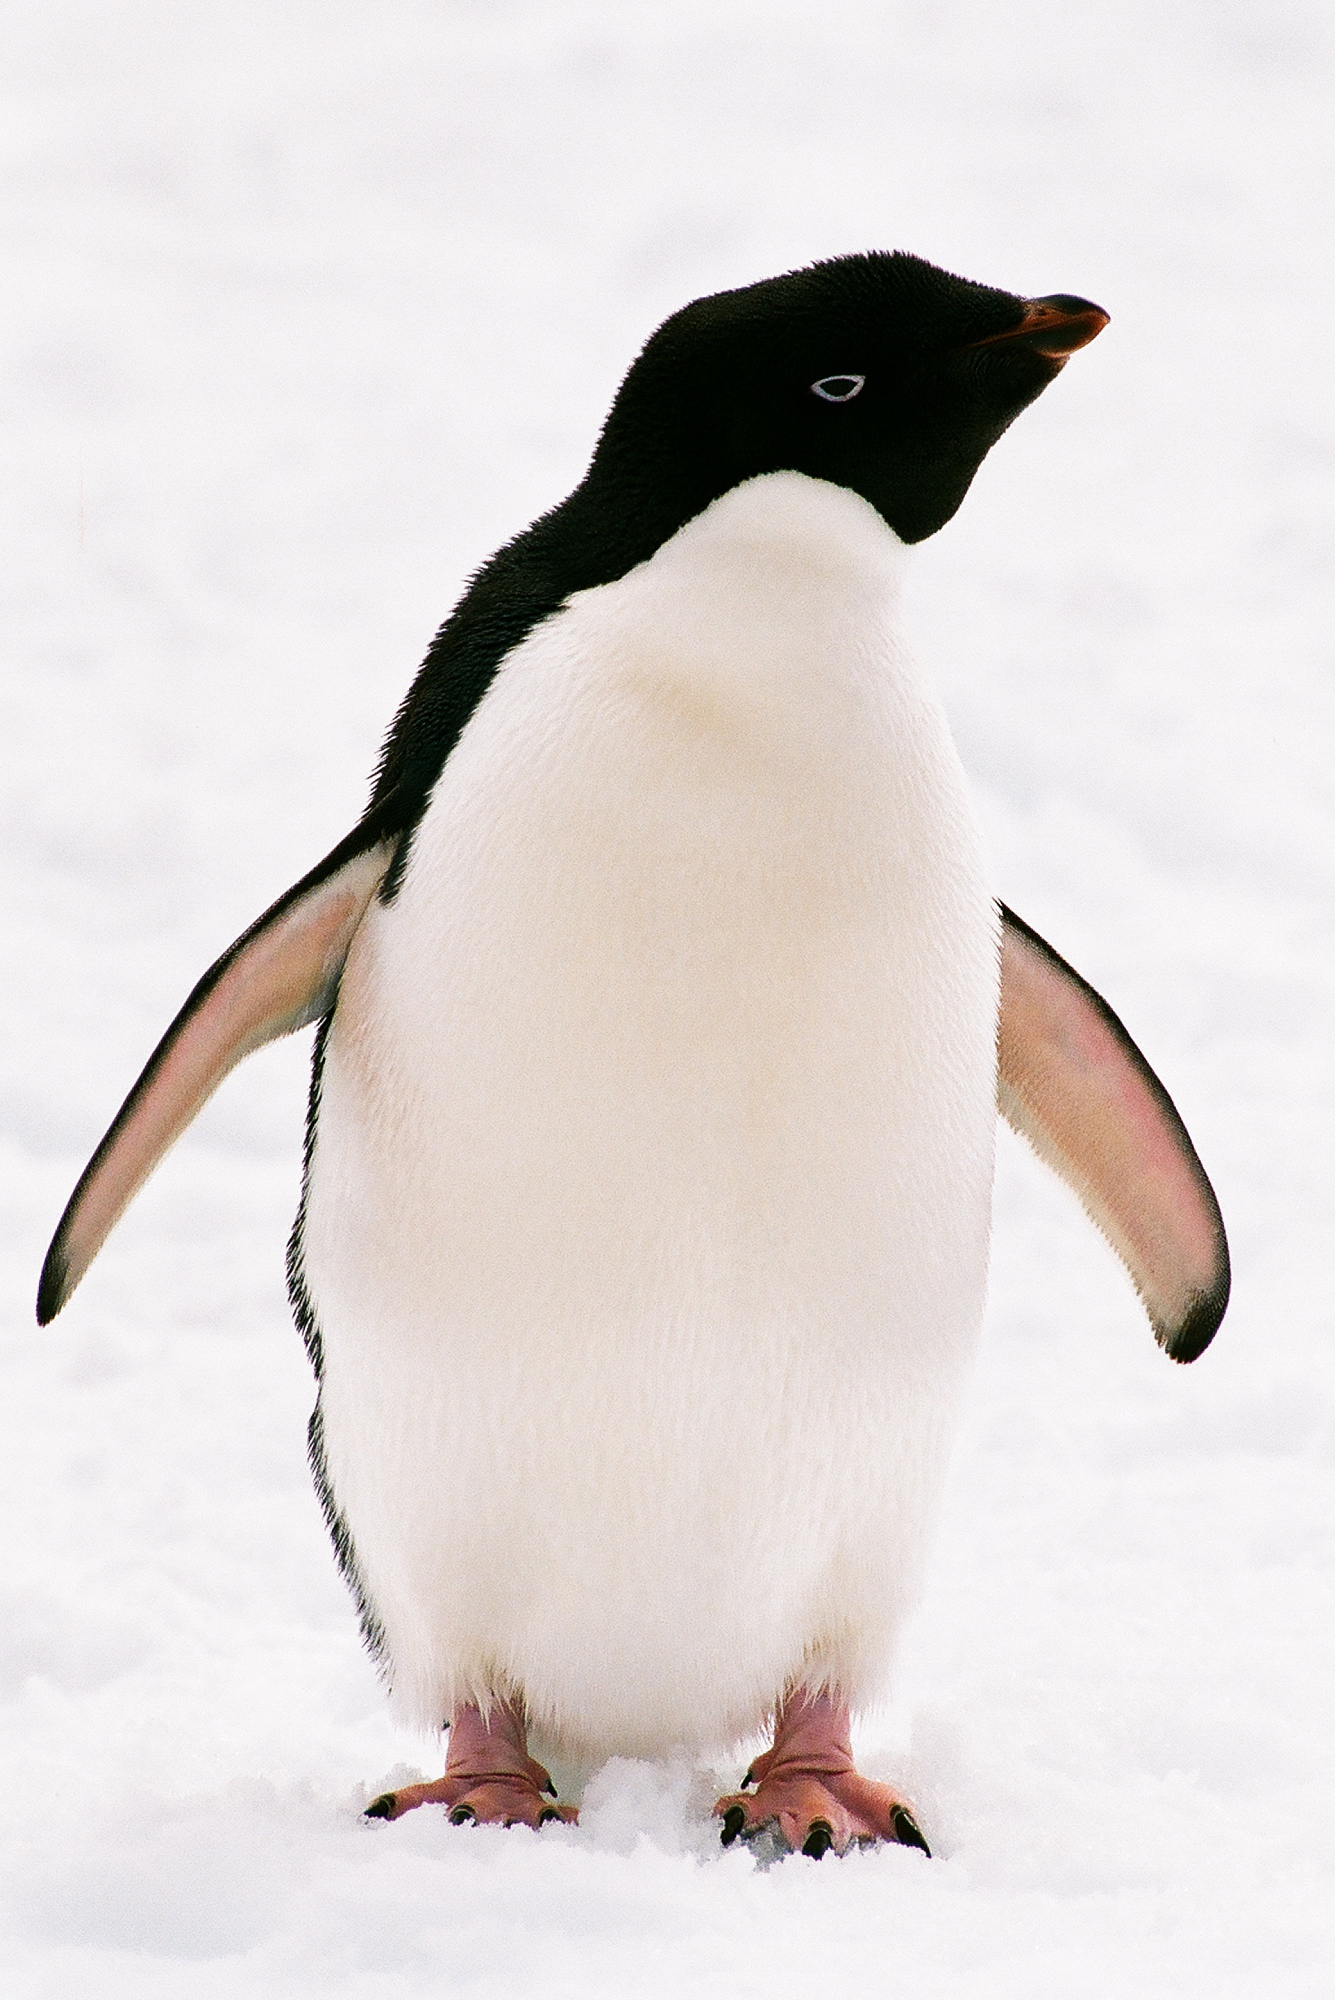 Little penguin - Wikipedia